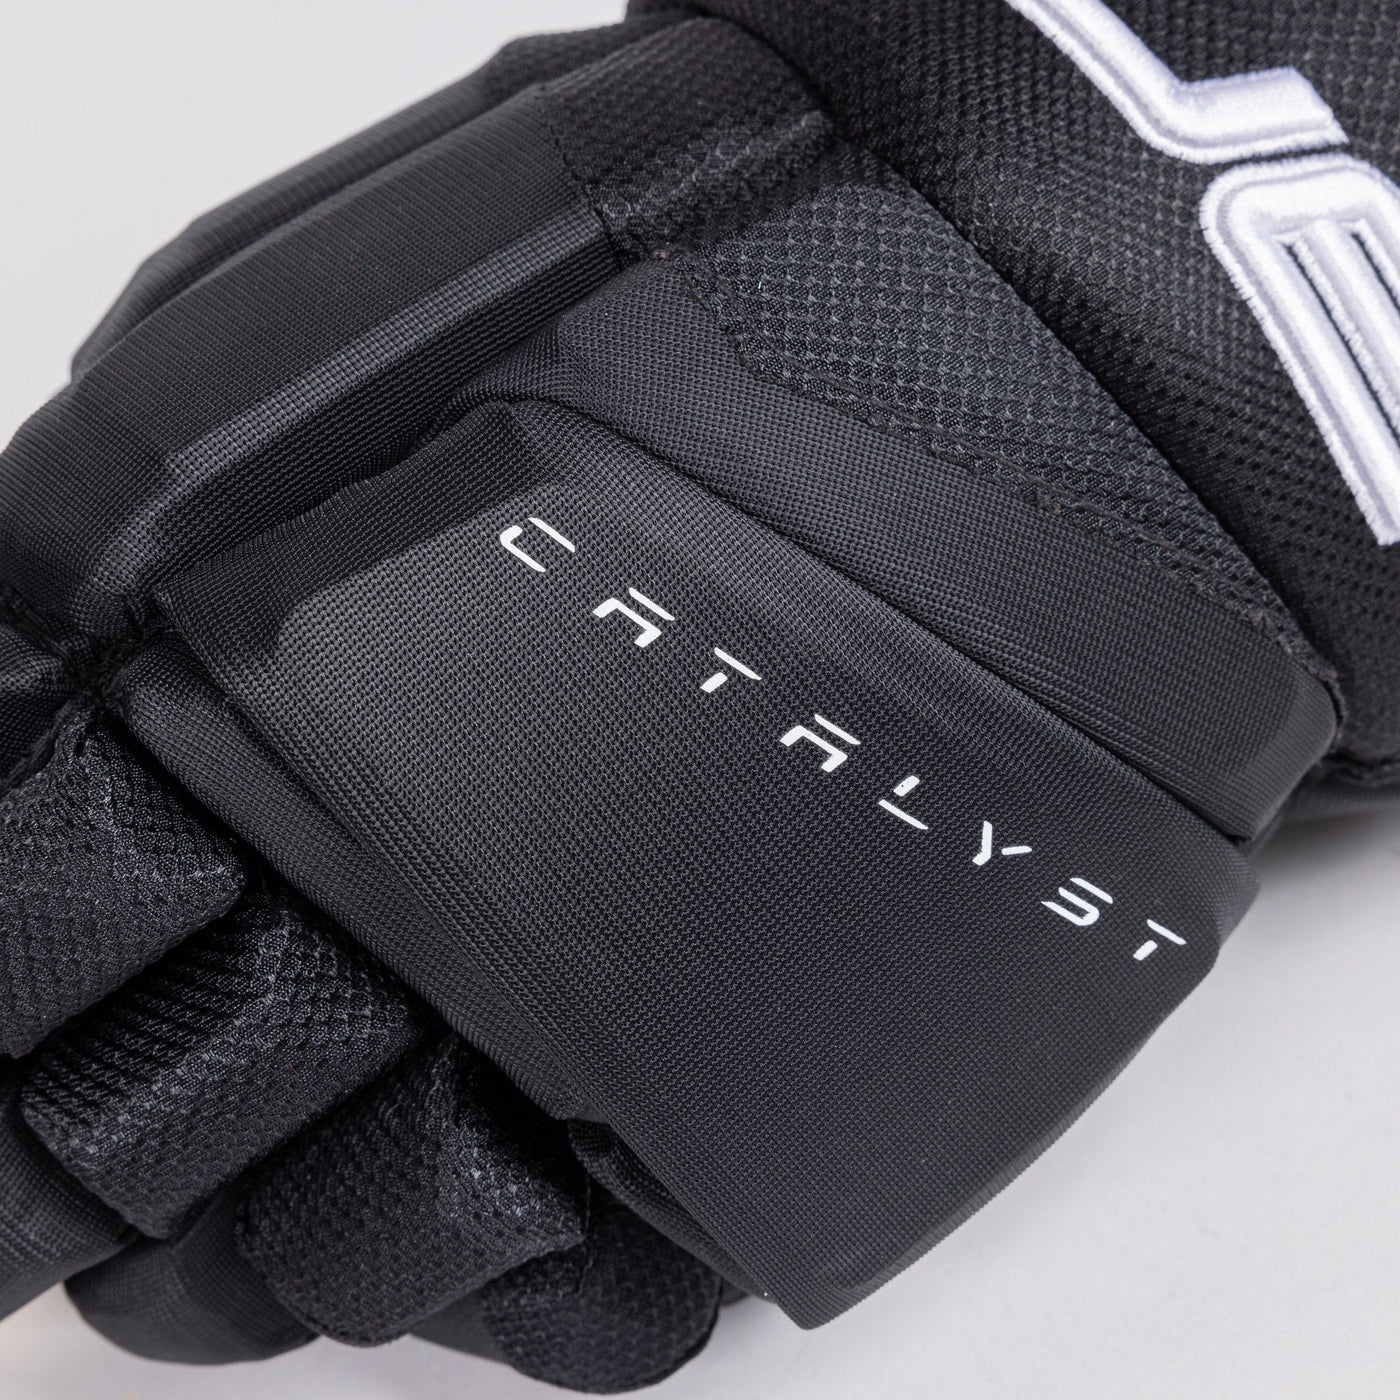 TRUE Catalyst Pro Stock Senior Hockey Glove - Edmonton - The Hockey Shop Source For Sports